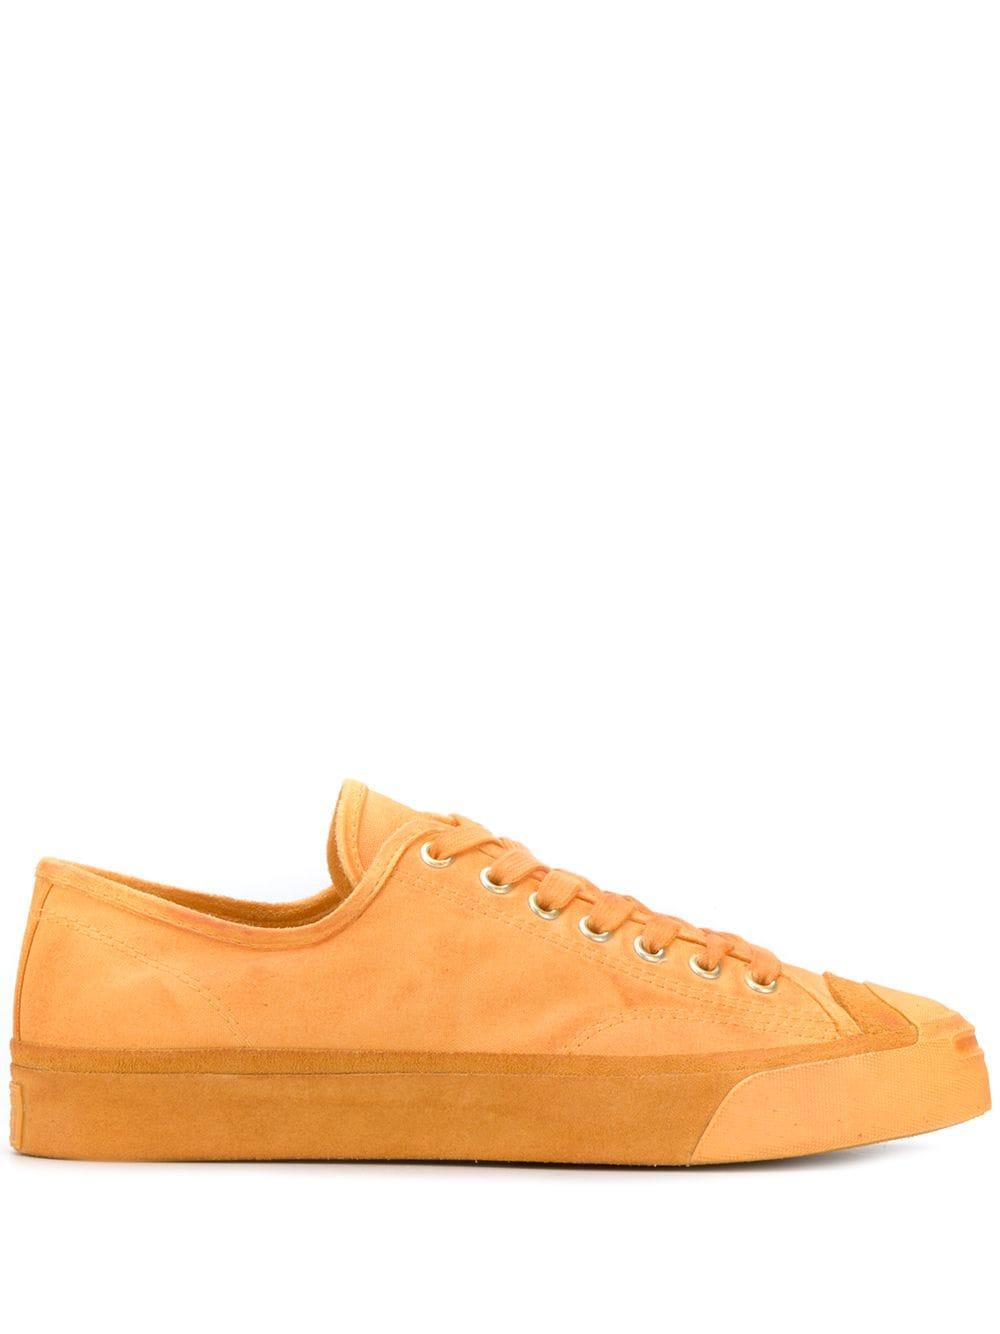 Converse Alcantara Sneakers Orange for Men